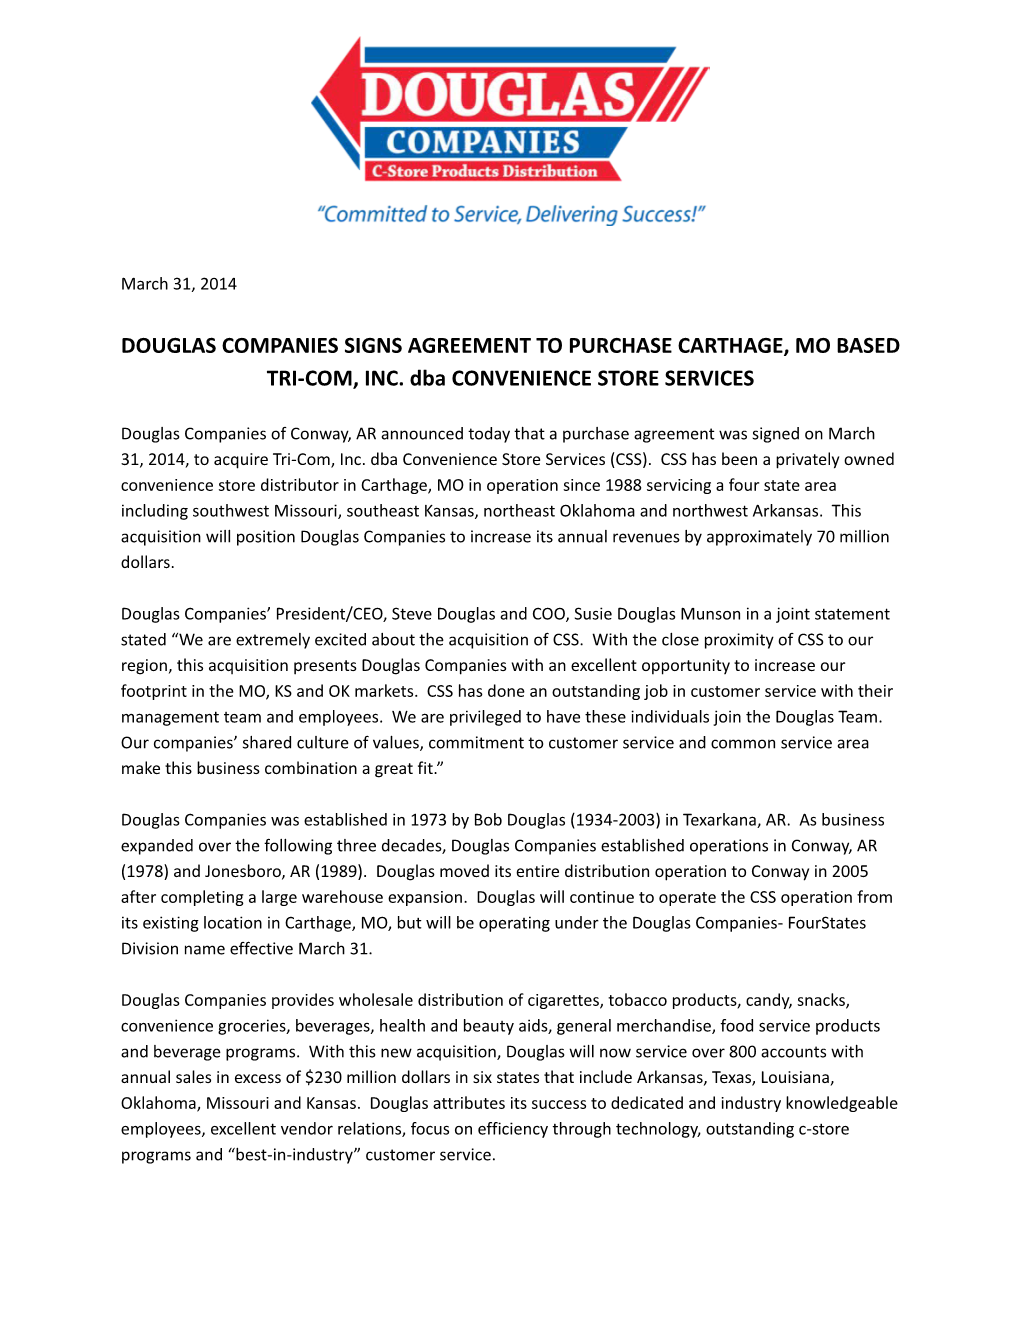 Douglas Companies Signs Agreement to Purchase Carthage, Mo Based Tri-Com, Inc